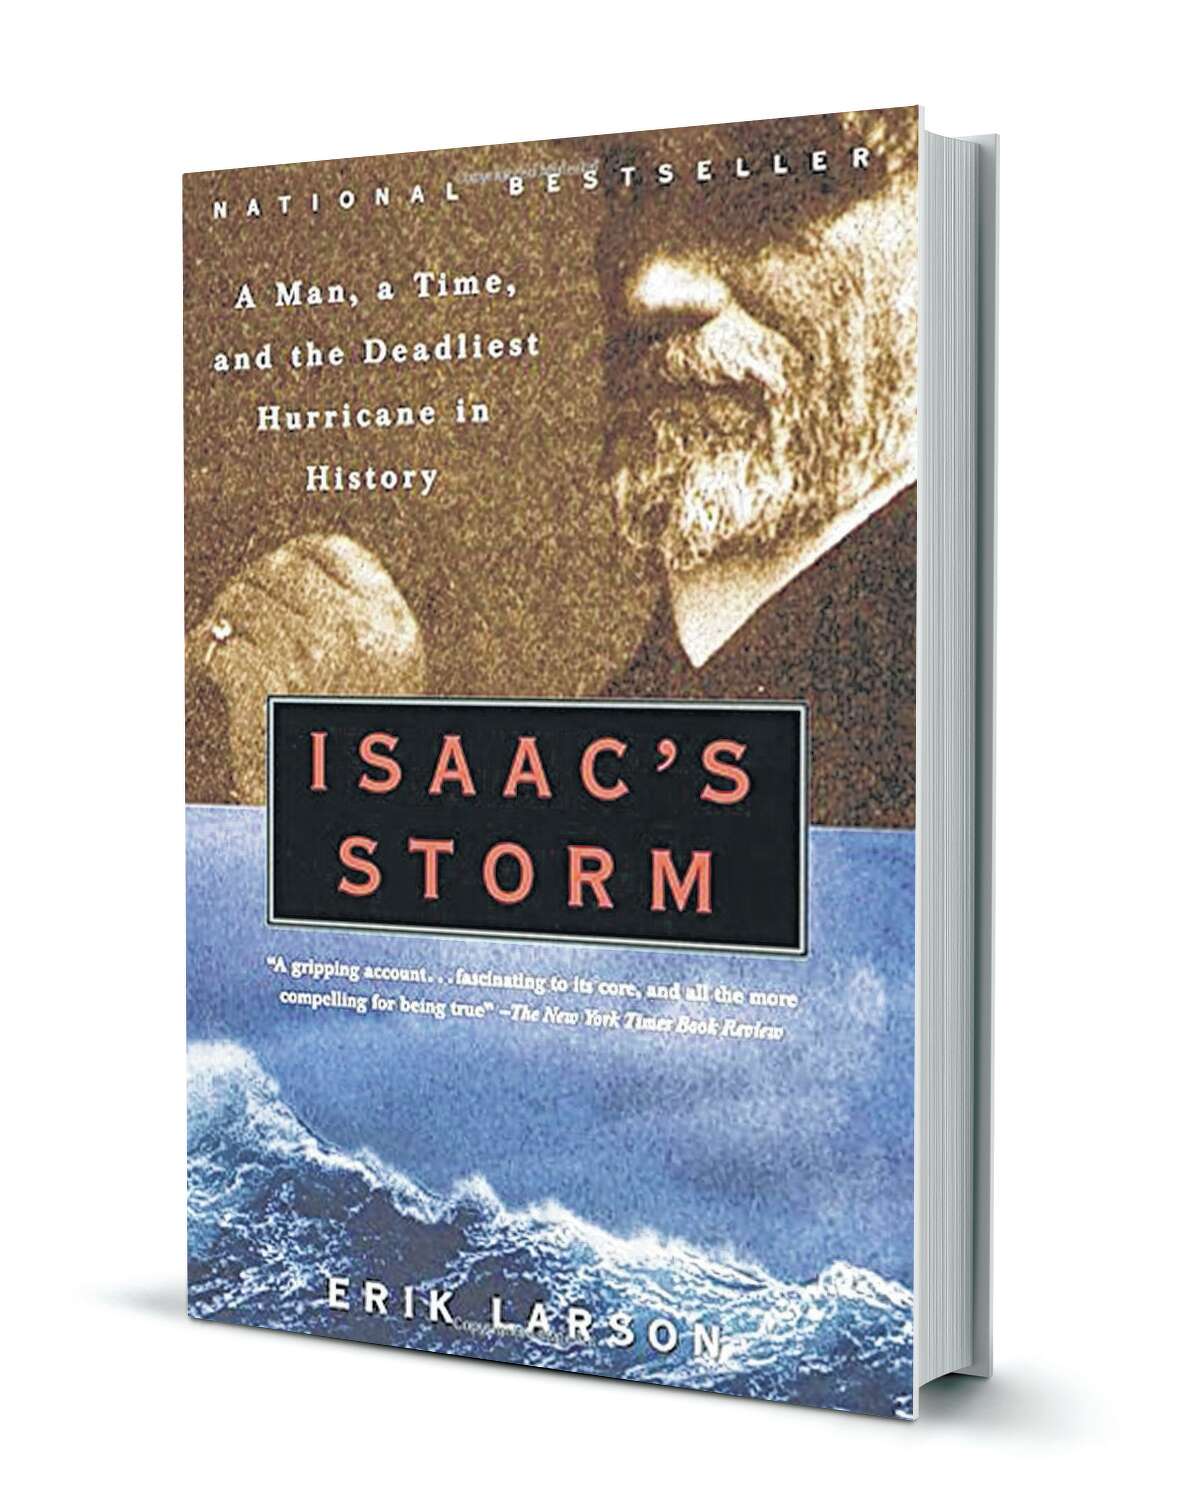 Book 1: 'Isaac’s Storm’ by Erik Larson (1999)